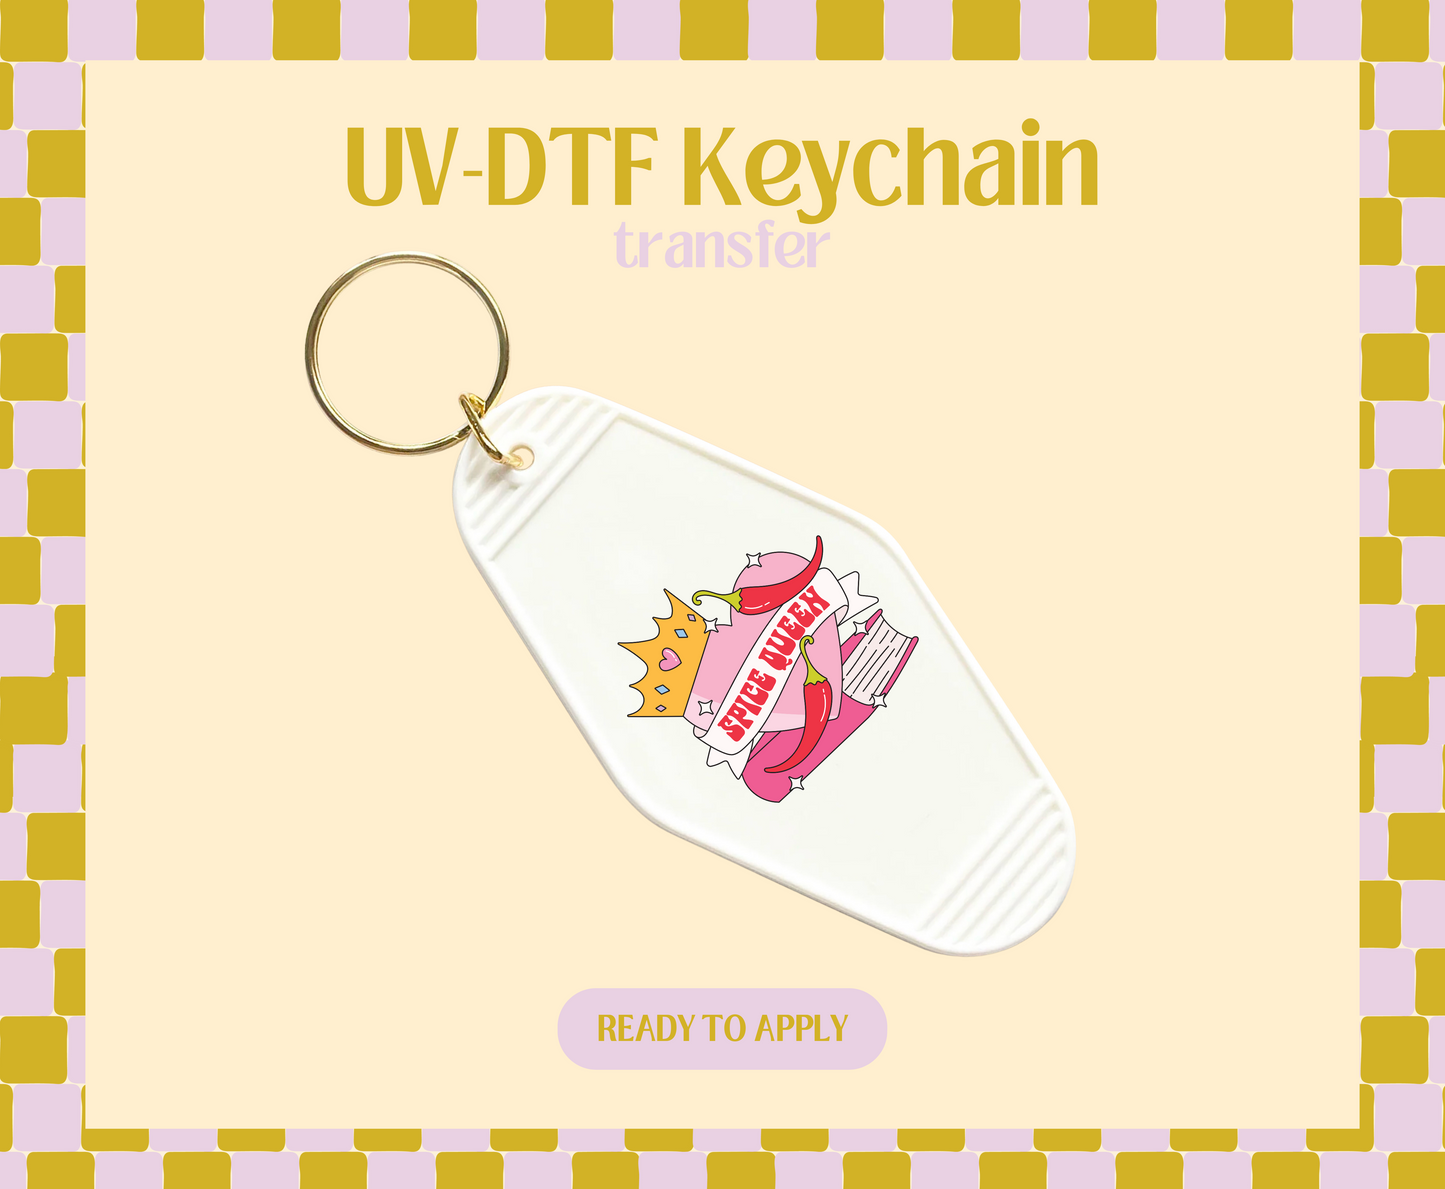 Spice Queen UV-DTF Keychain